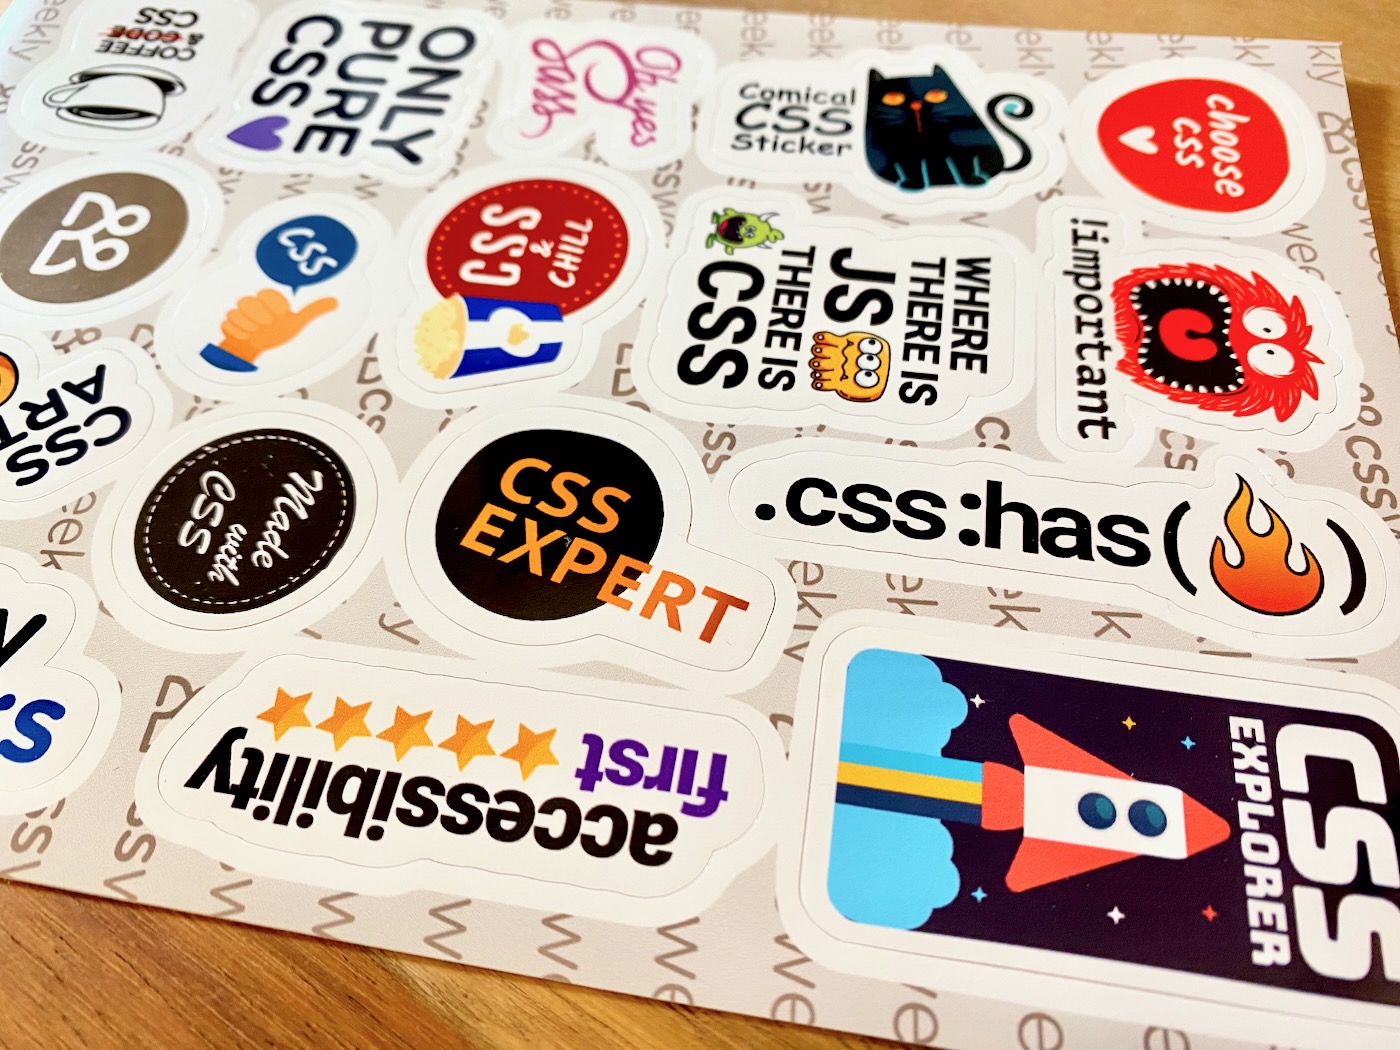 Set #3 — 17 Stickers / Small Size